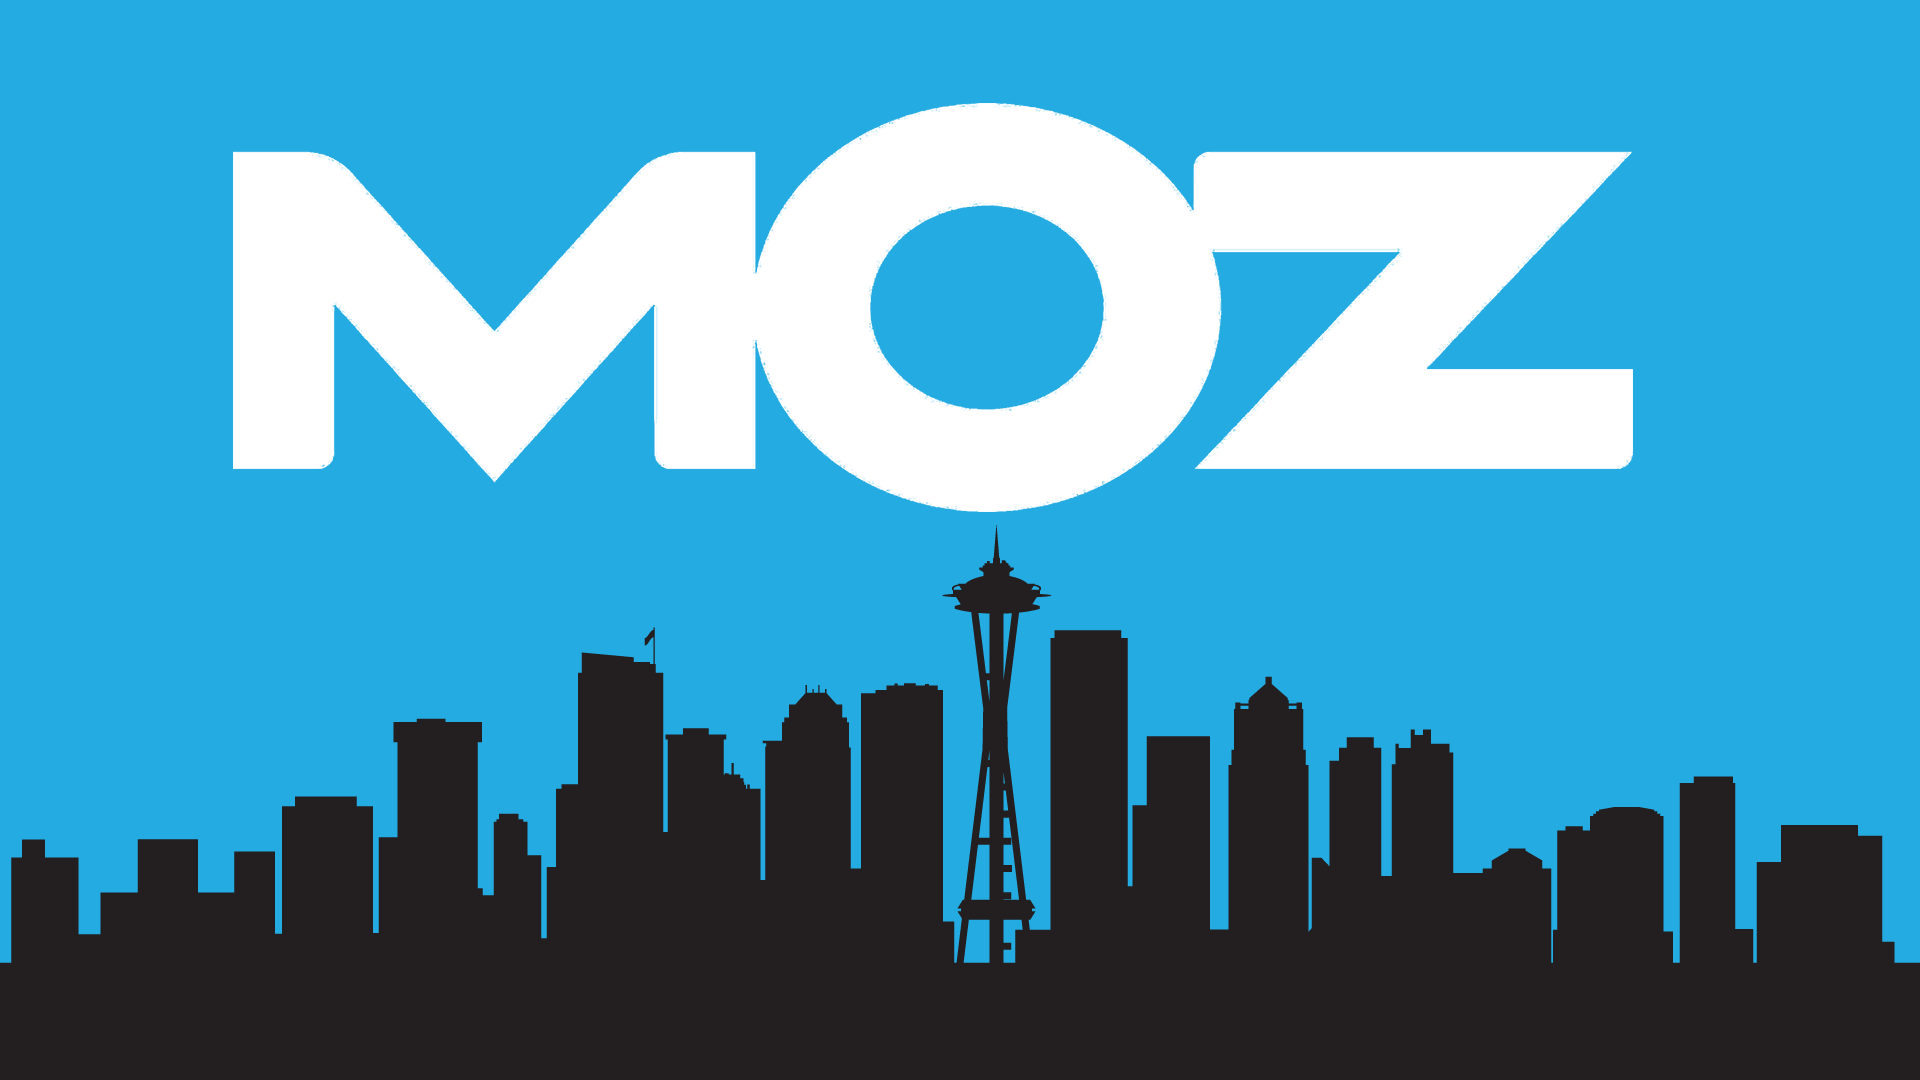 moz-logo-seattle-skyline-ss-1920